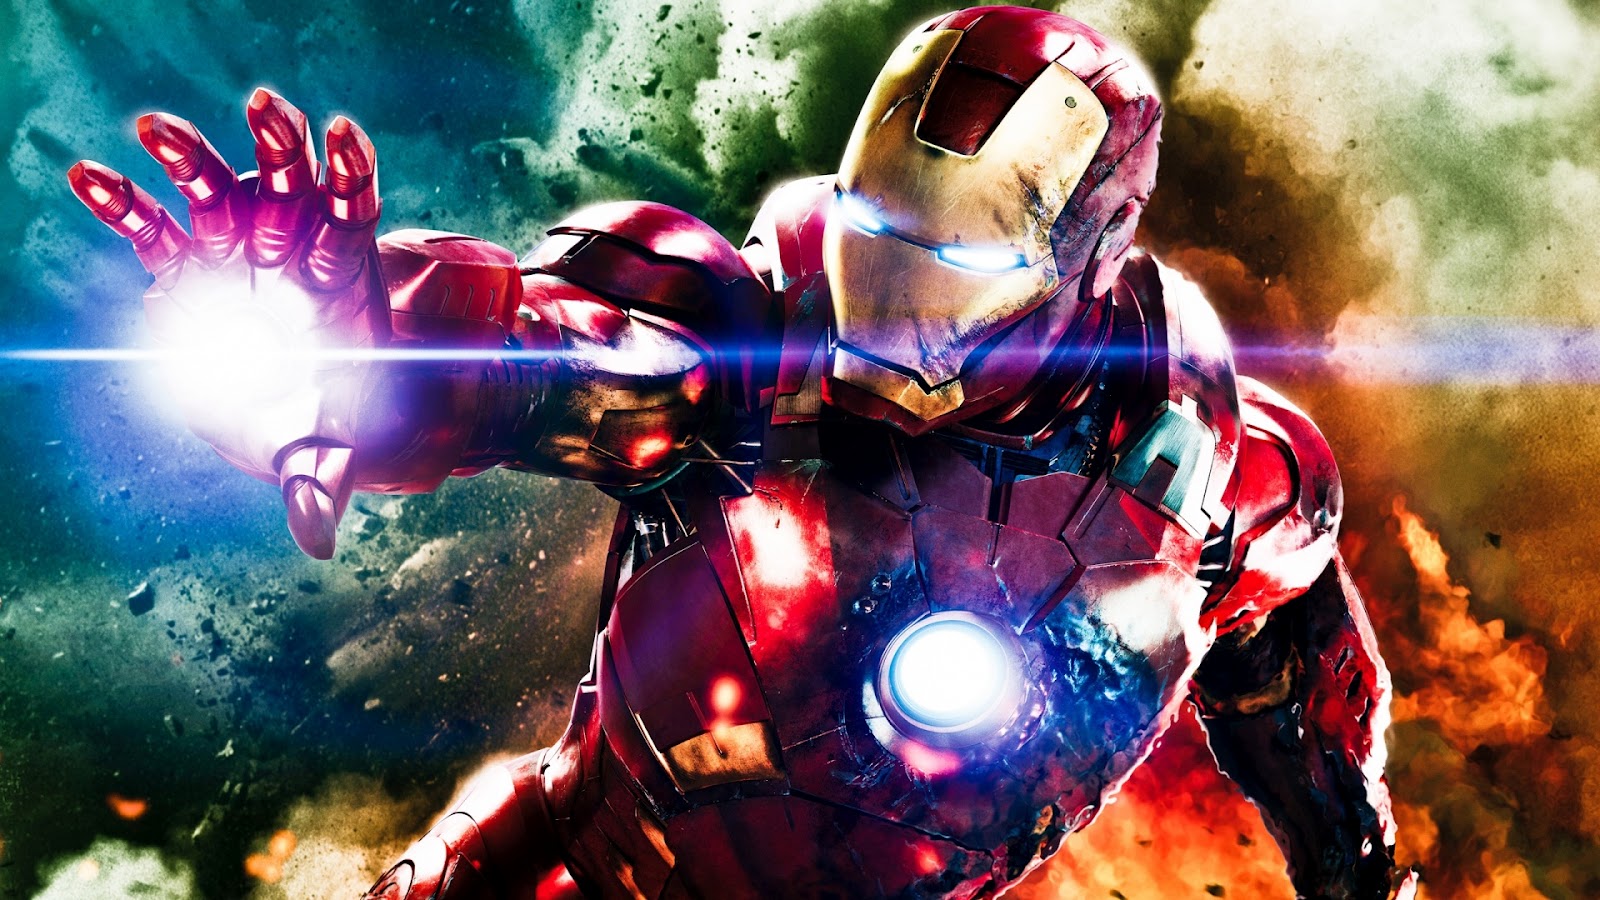 iron man wallpaper hd 1080p,action adventure spiel,ironman,superheld,erfundener charakter,cg kunstwerk